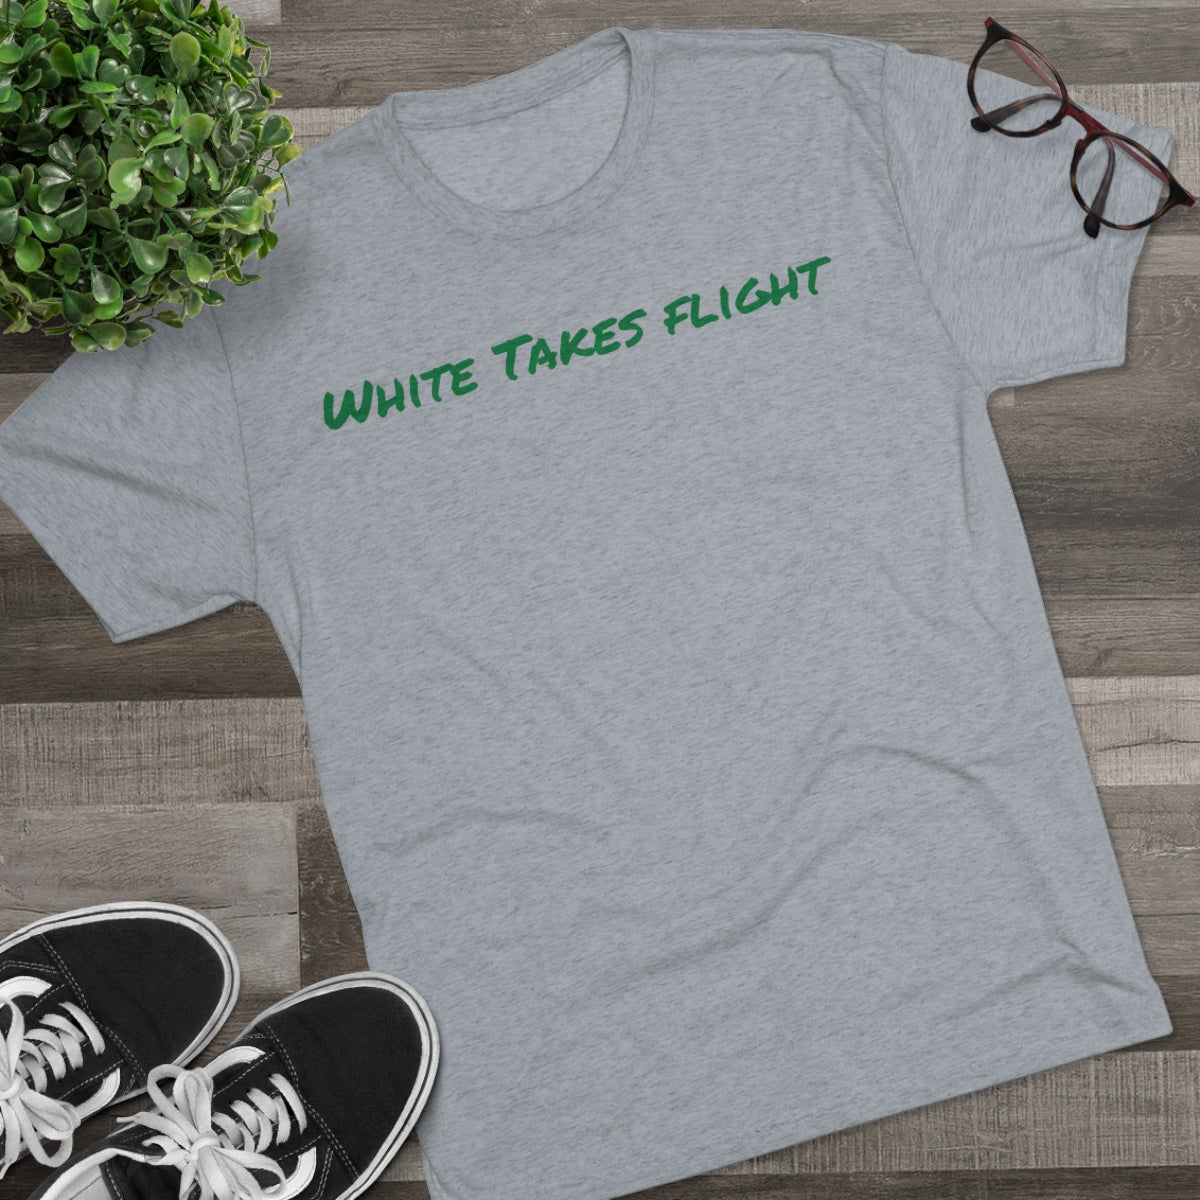 White Takes Flight Shirt - IsGoodBrand